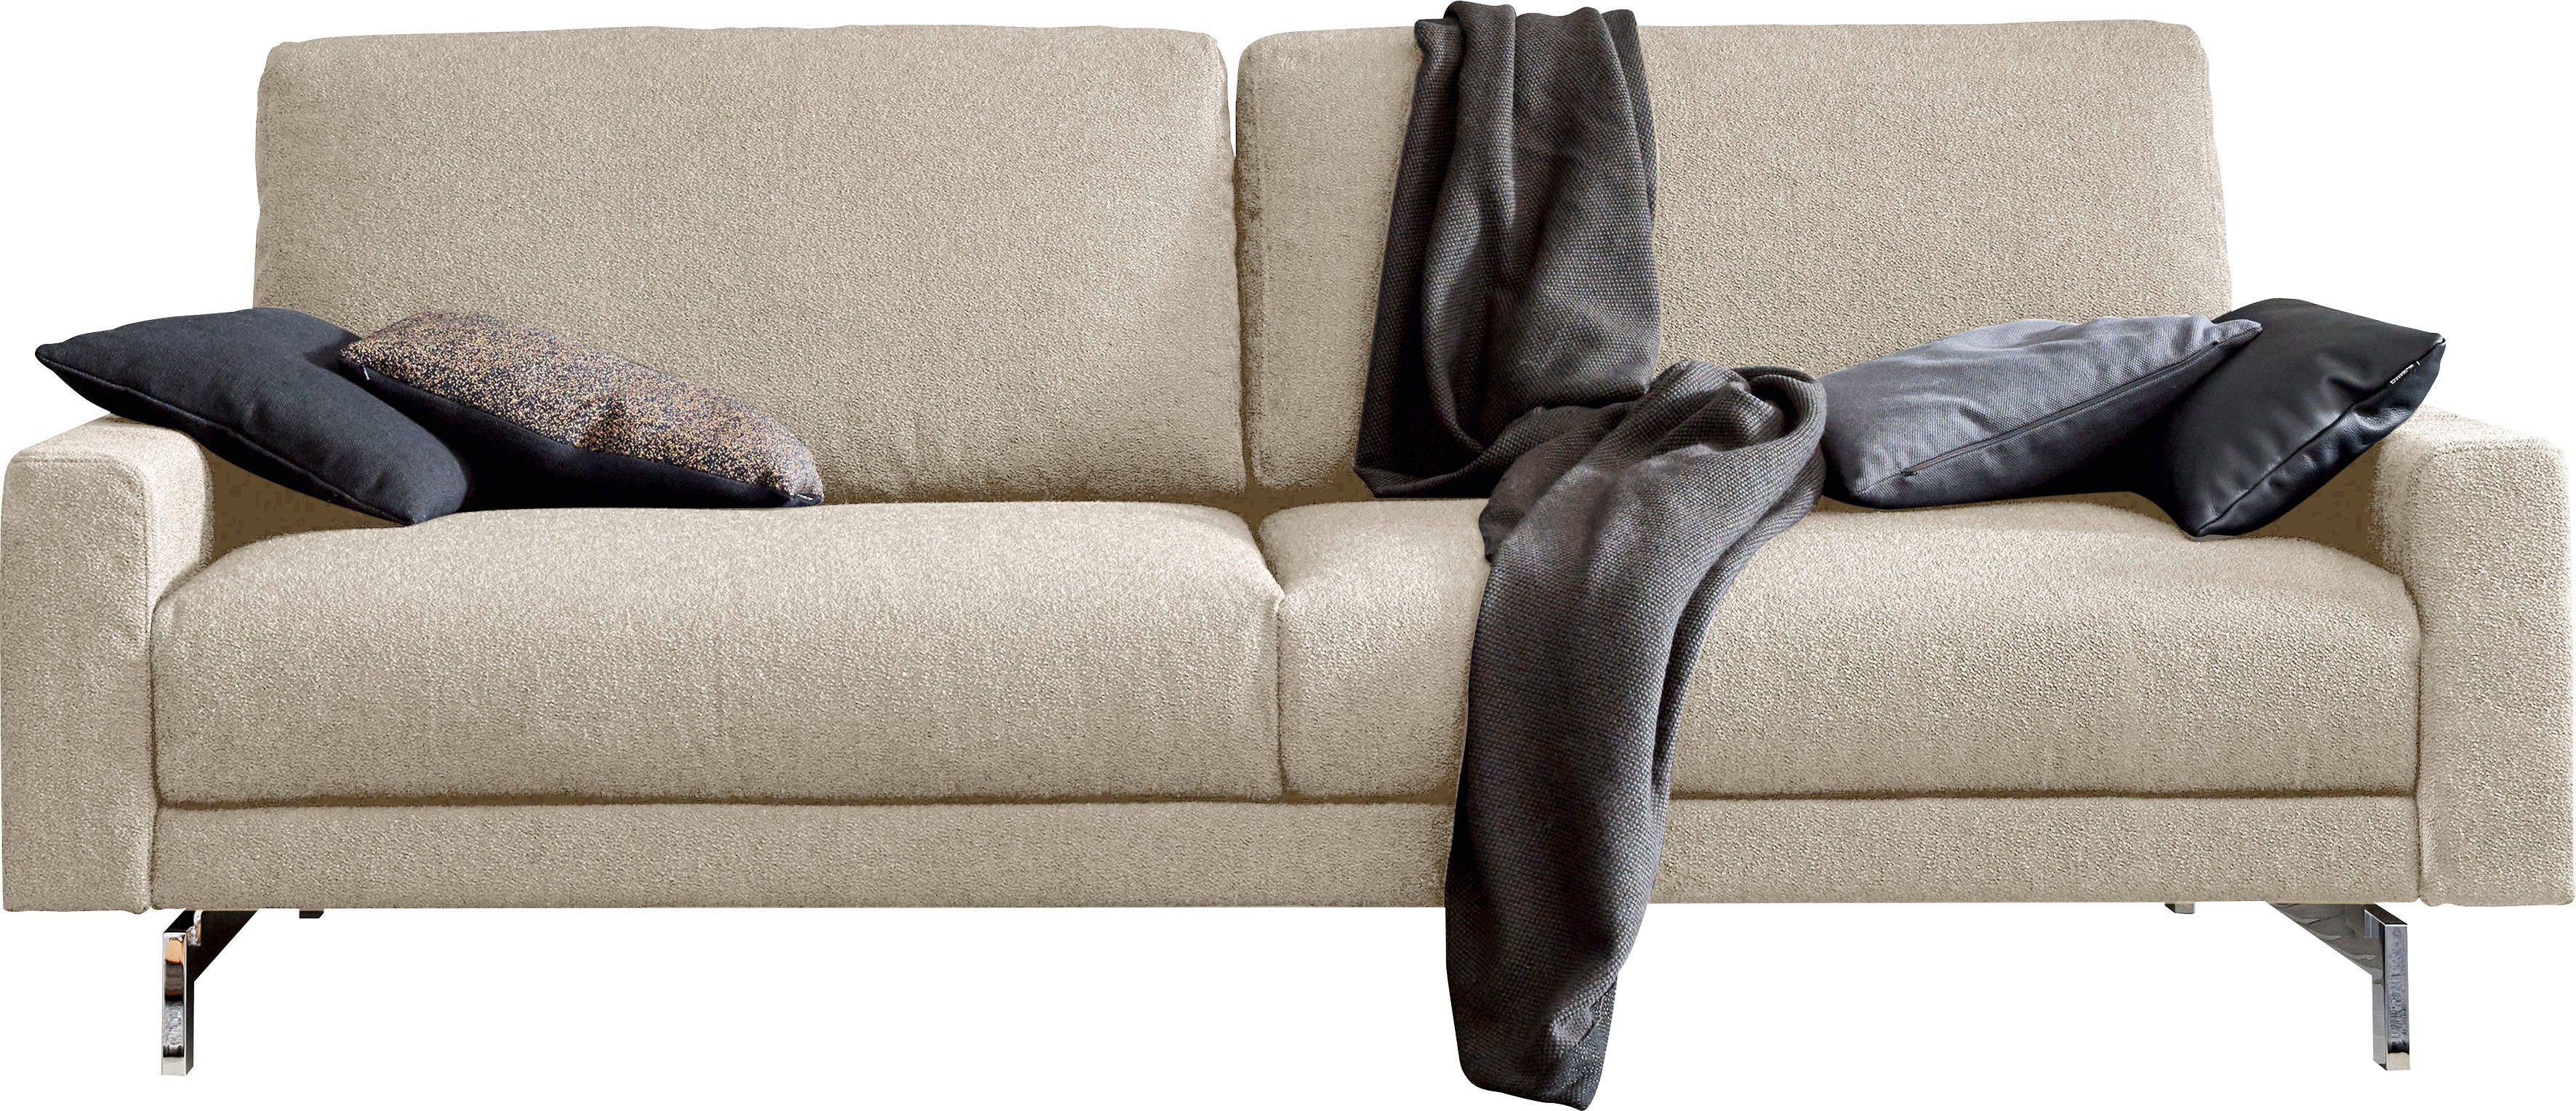 Armlehne chromfarben cm glänzend, 164 hs.450, 2-Sitzer niedrig, hülsta sofa Breite Fuß